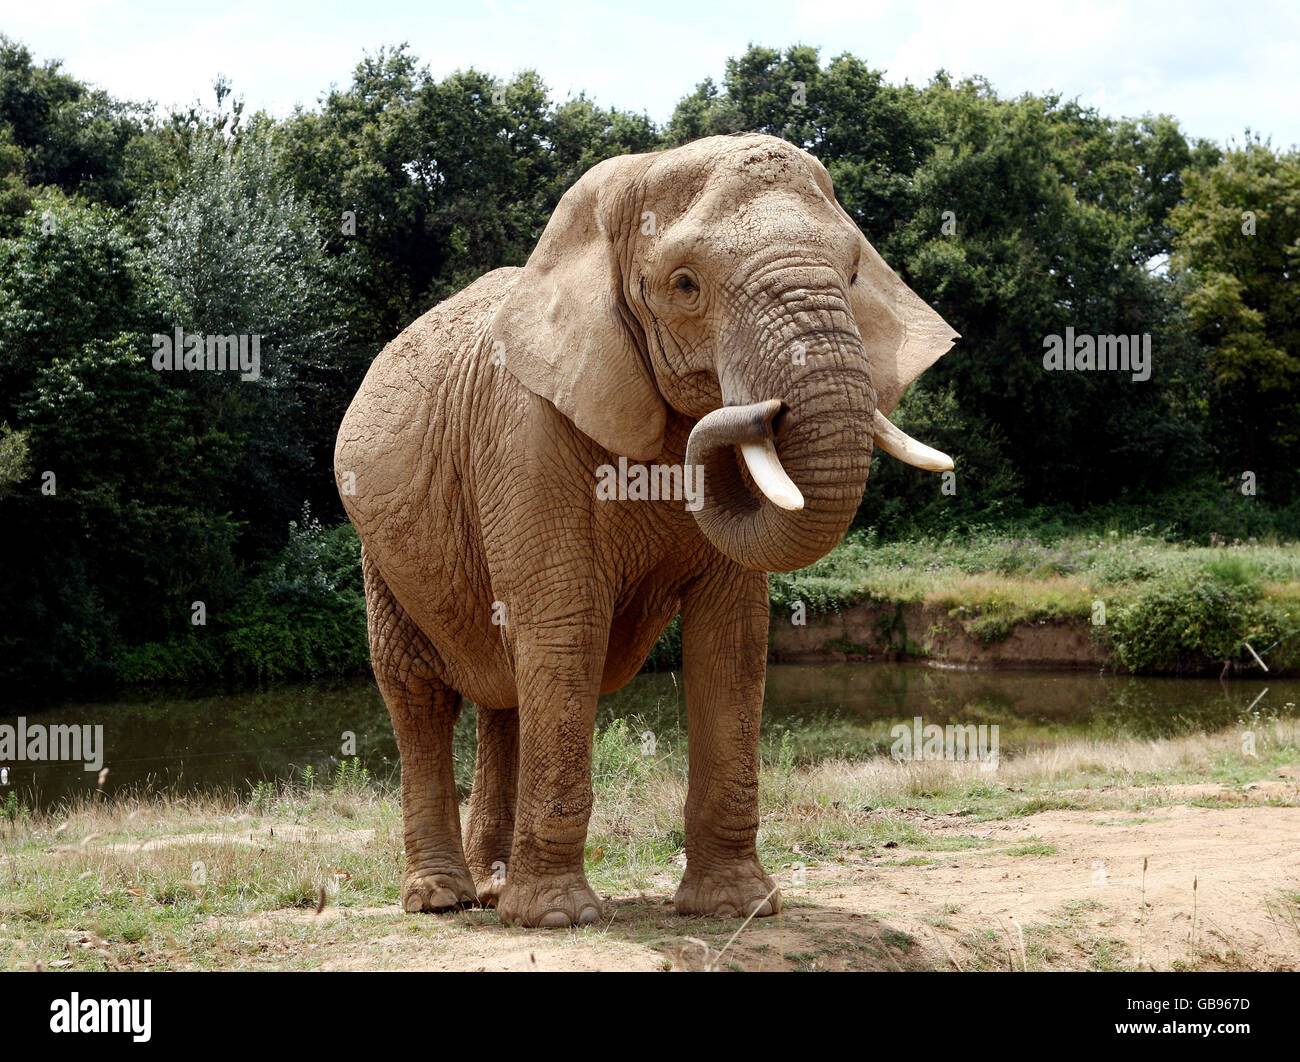 Travel Stock - Safari Park - Nantes. An Elephant at a safari park near Nantes, France. Stock Photo